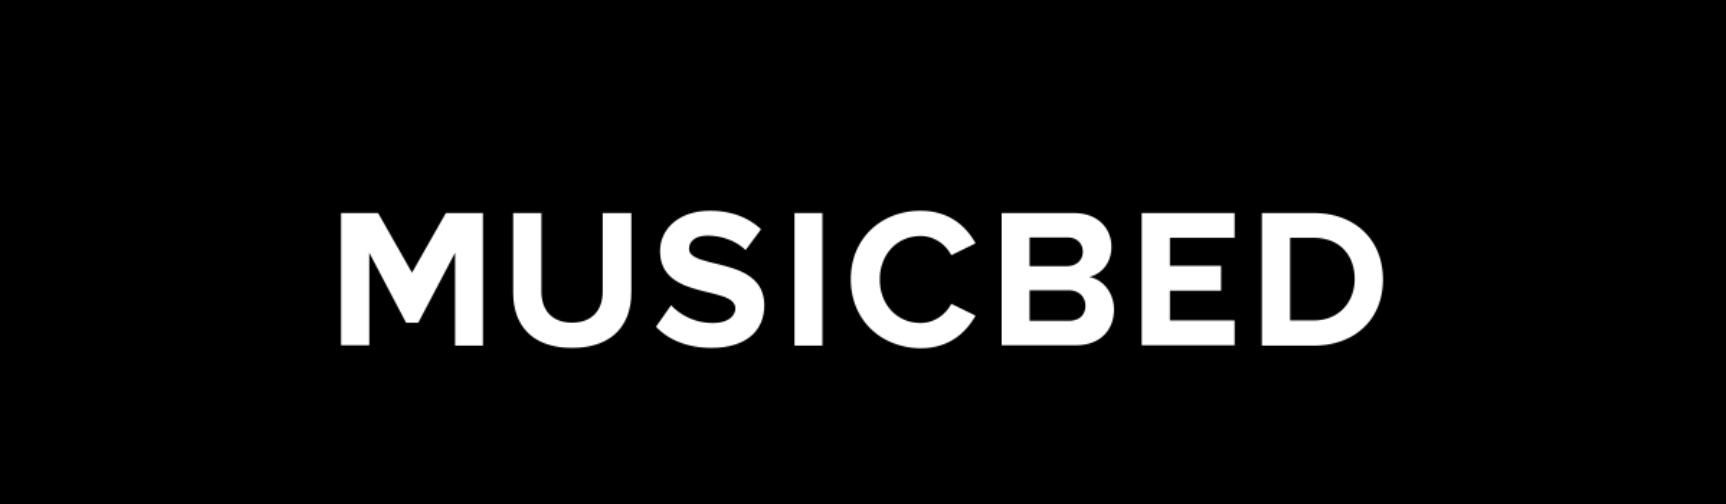 musicbed logo